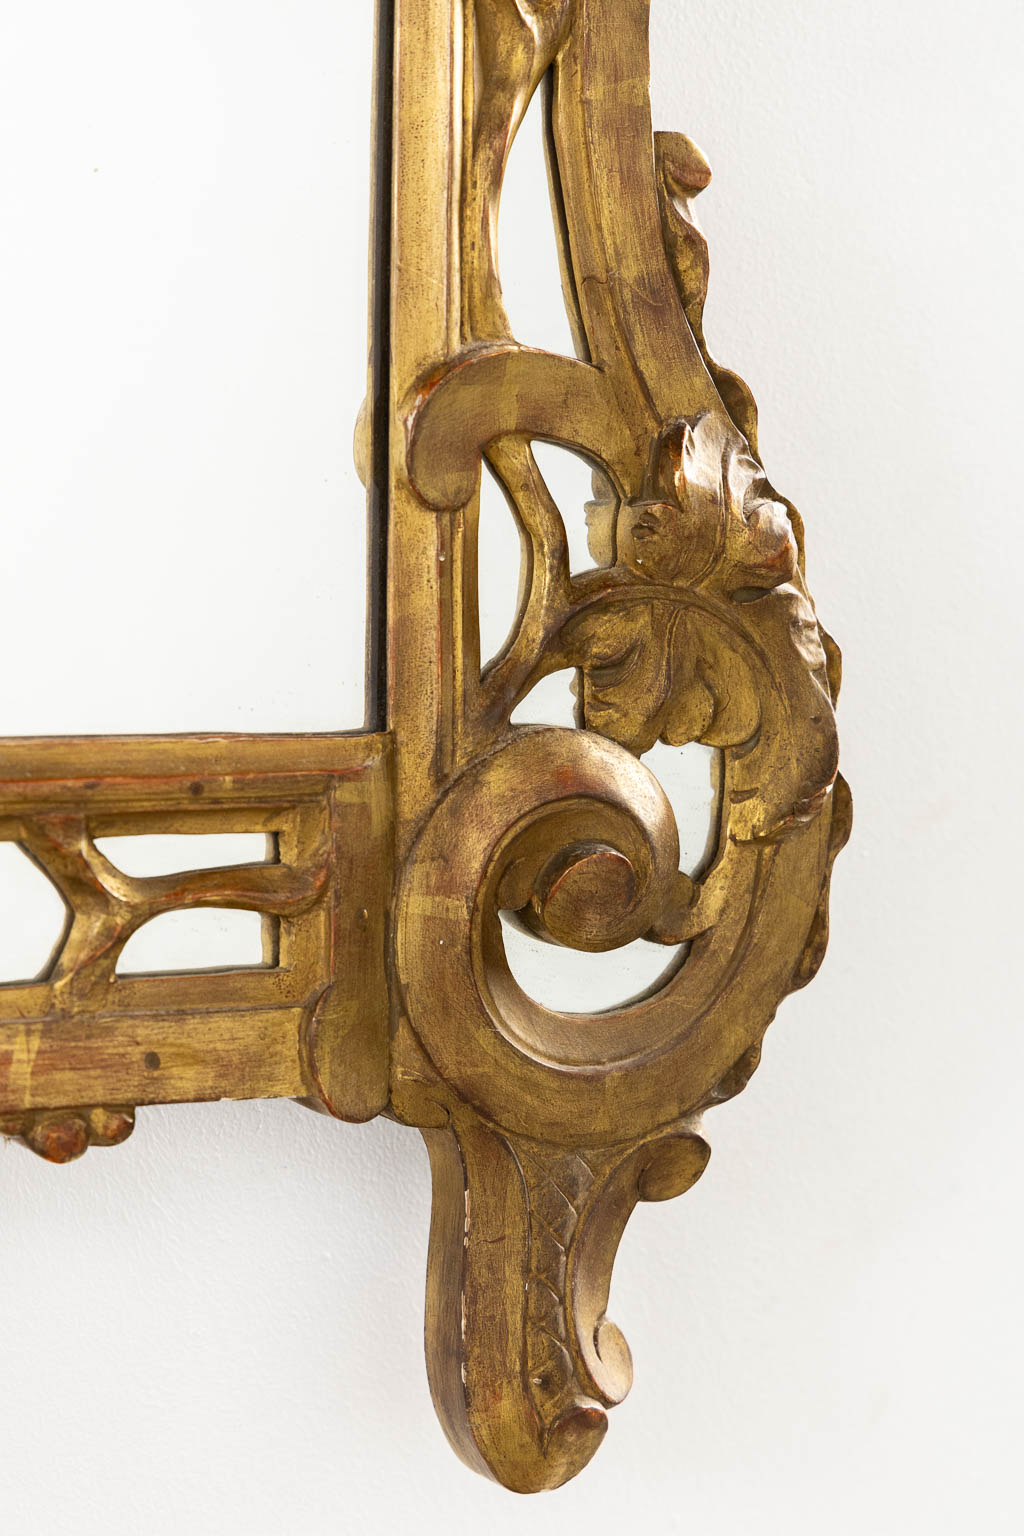 An antique, wood-sculptured and gilt mirror, France, 20th C. (W:74 x H:130 cm)